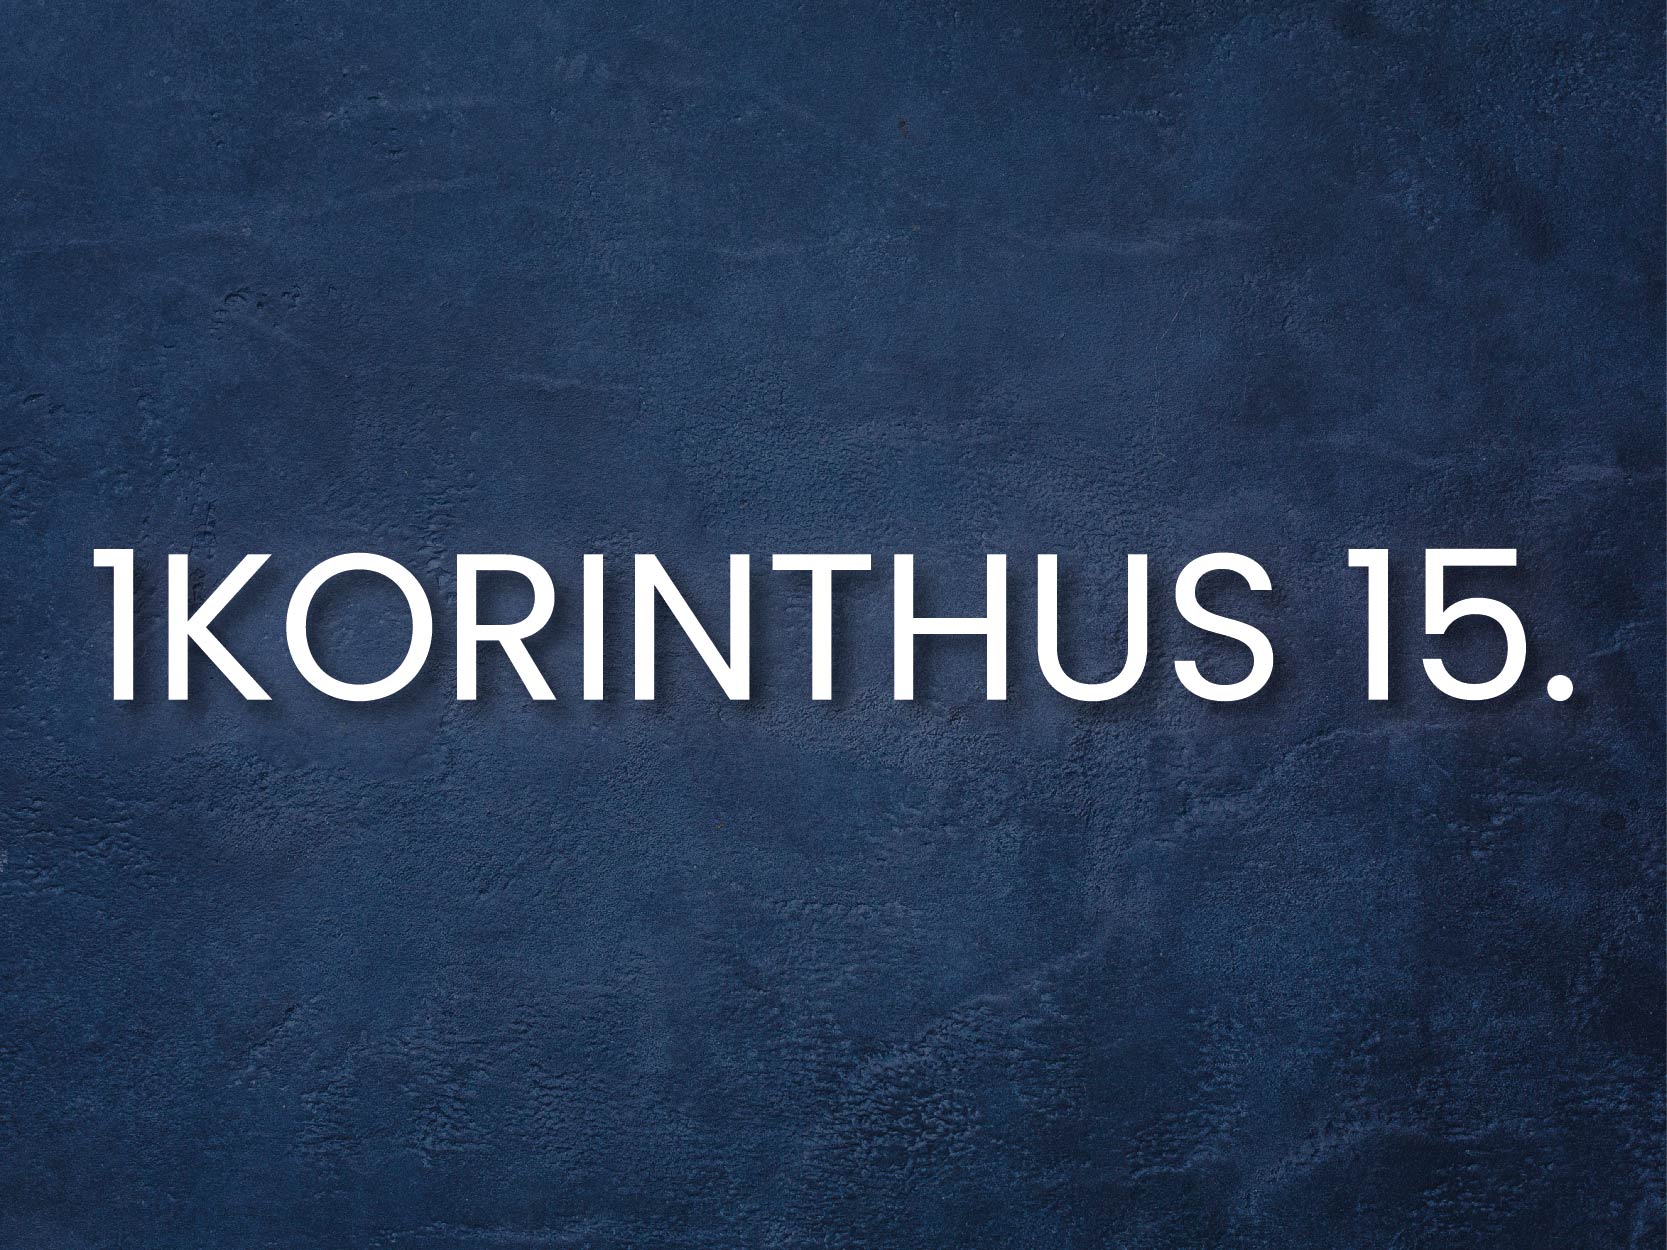 INFO_korinthus_15